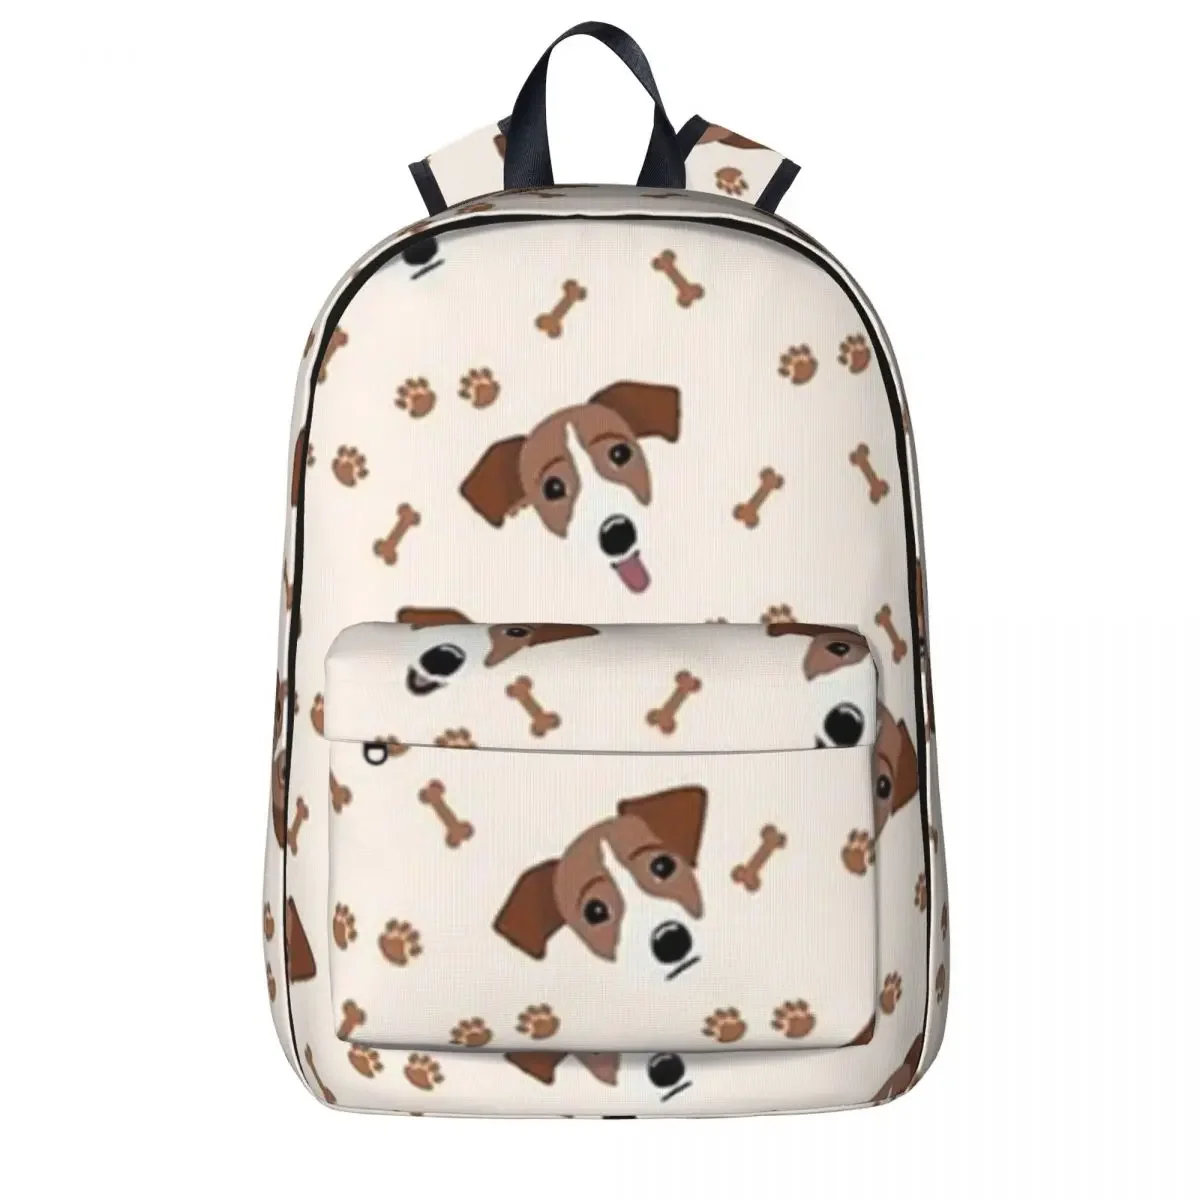 

Jack Russell Terrier Dog With Bones Backpack Casual Children School Bag Laptop Rucksack Travel Rucksack Large Capacity Bookbag